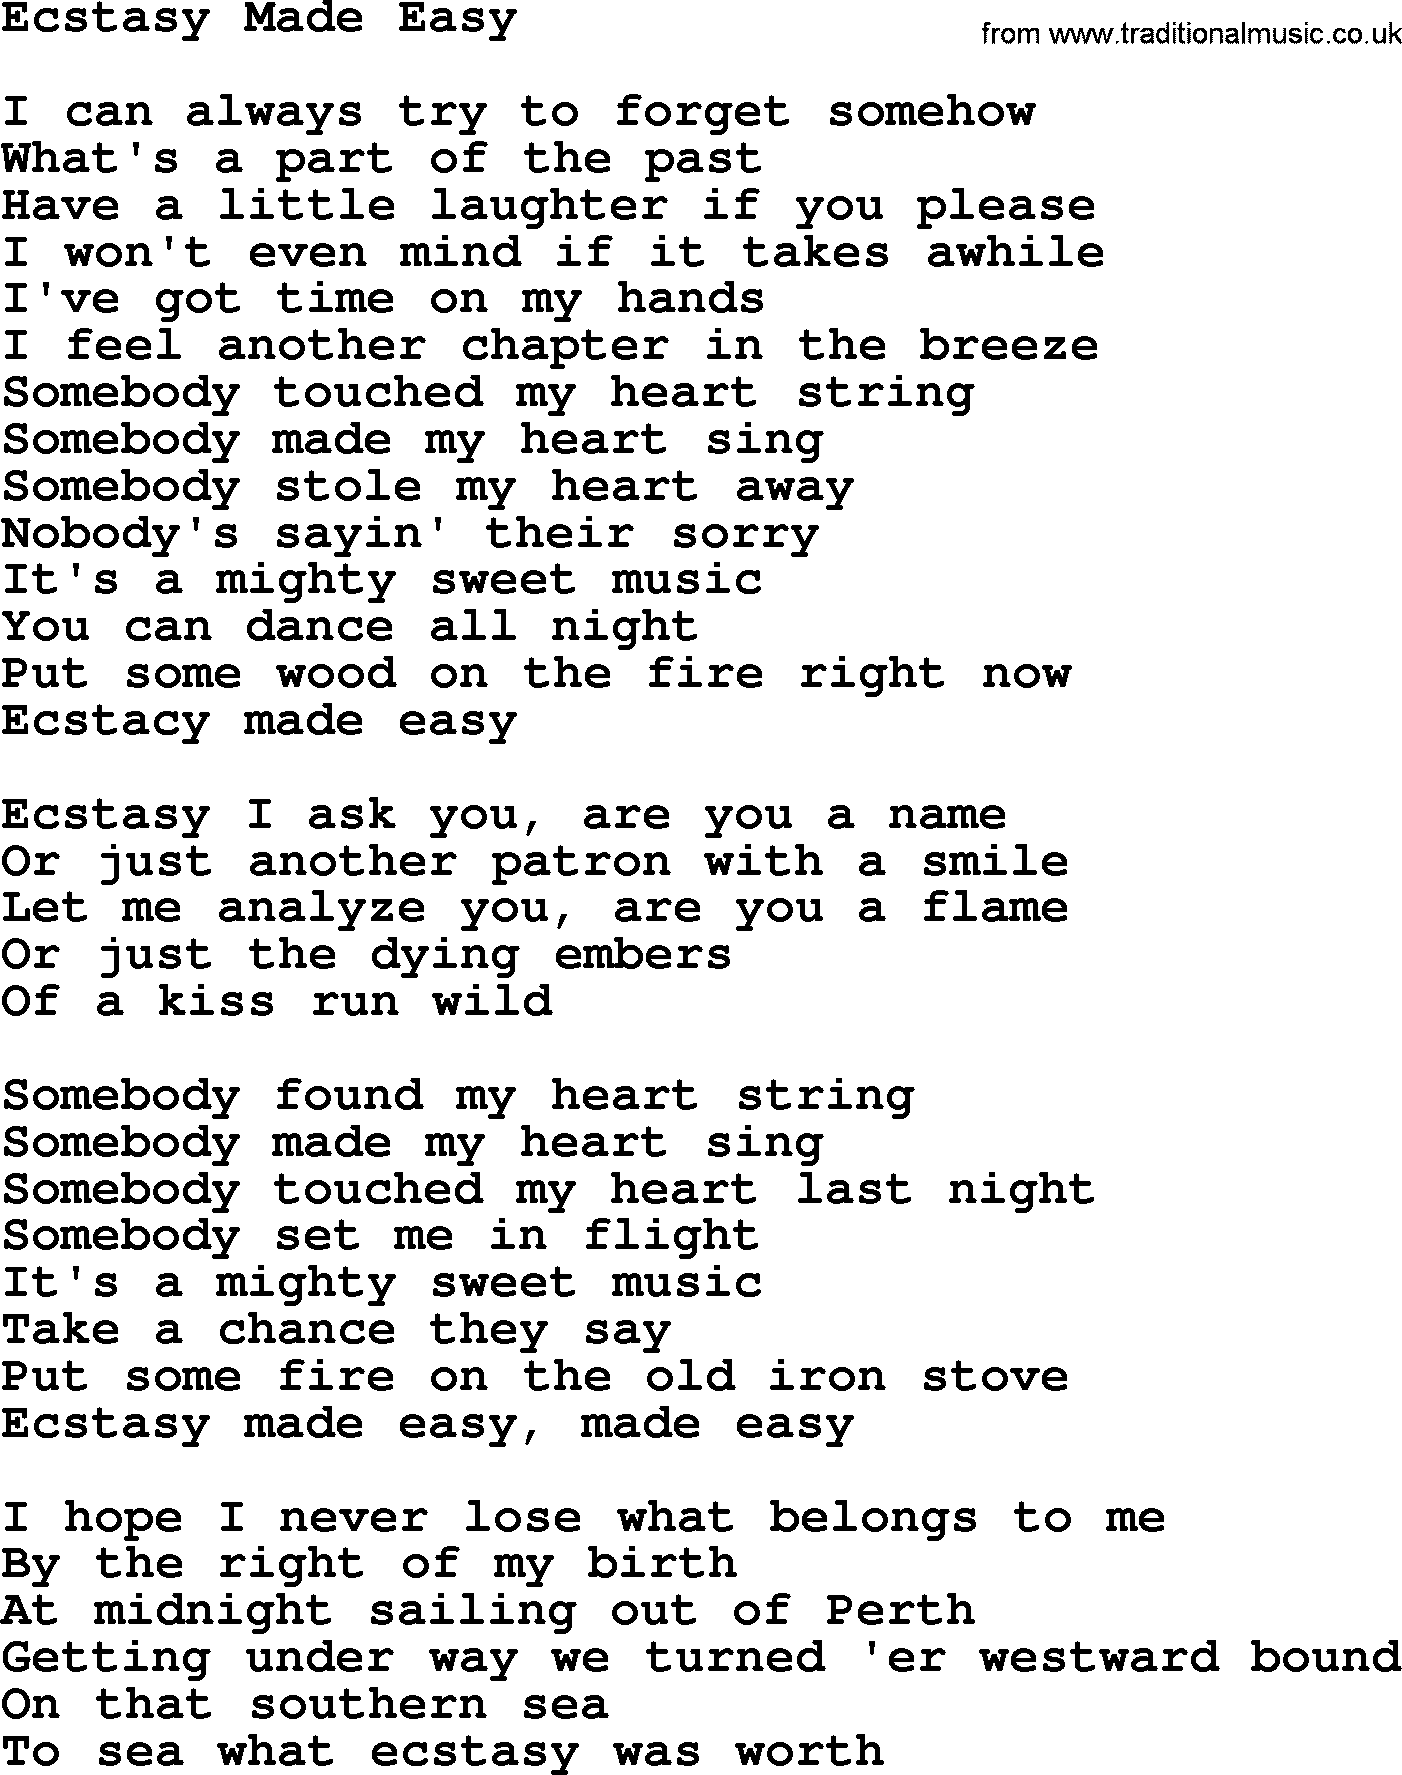 Gordon Lightfoot song Ecstasy Made Easy, lyrics